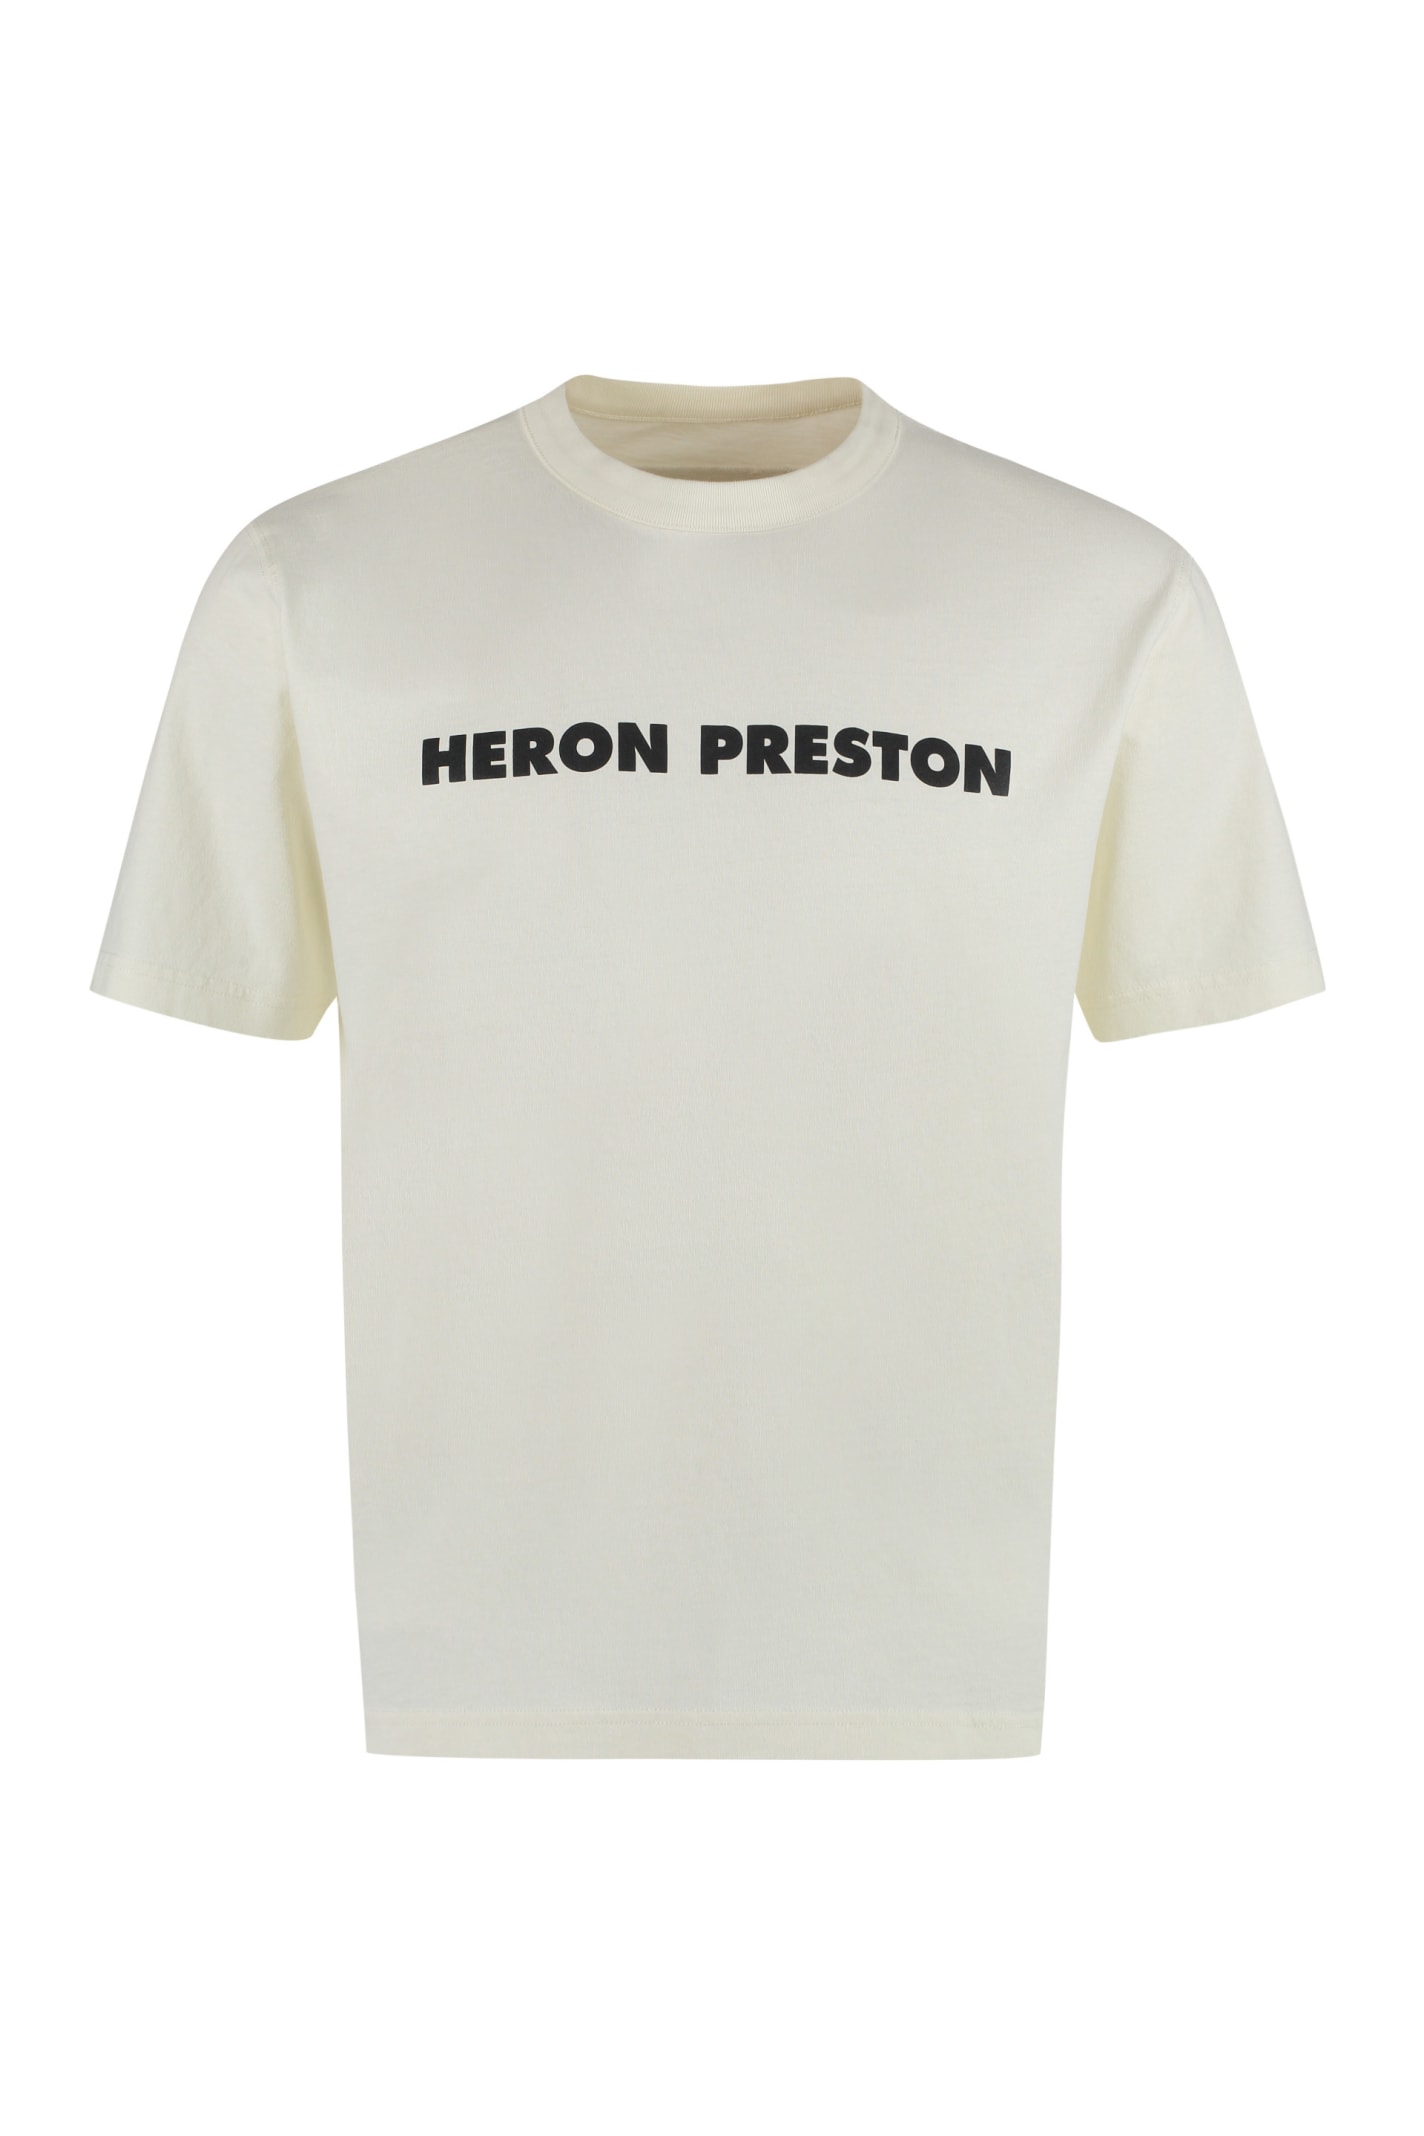 HERON PRESTON LOGO COTTON T-SHIRT